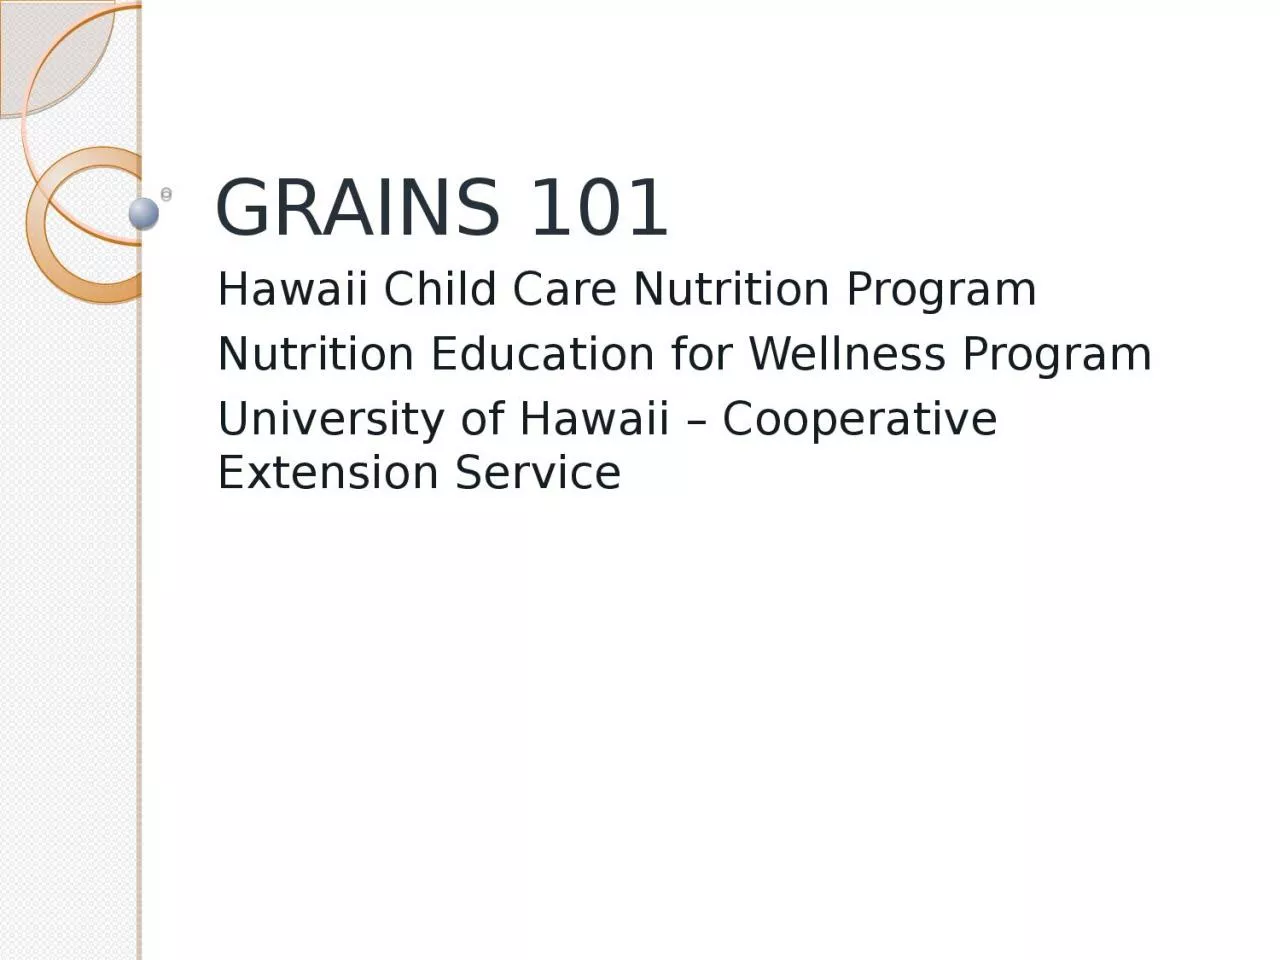 GRAINS 101 Hawaii Child Care Nutrition Program